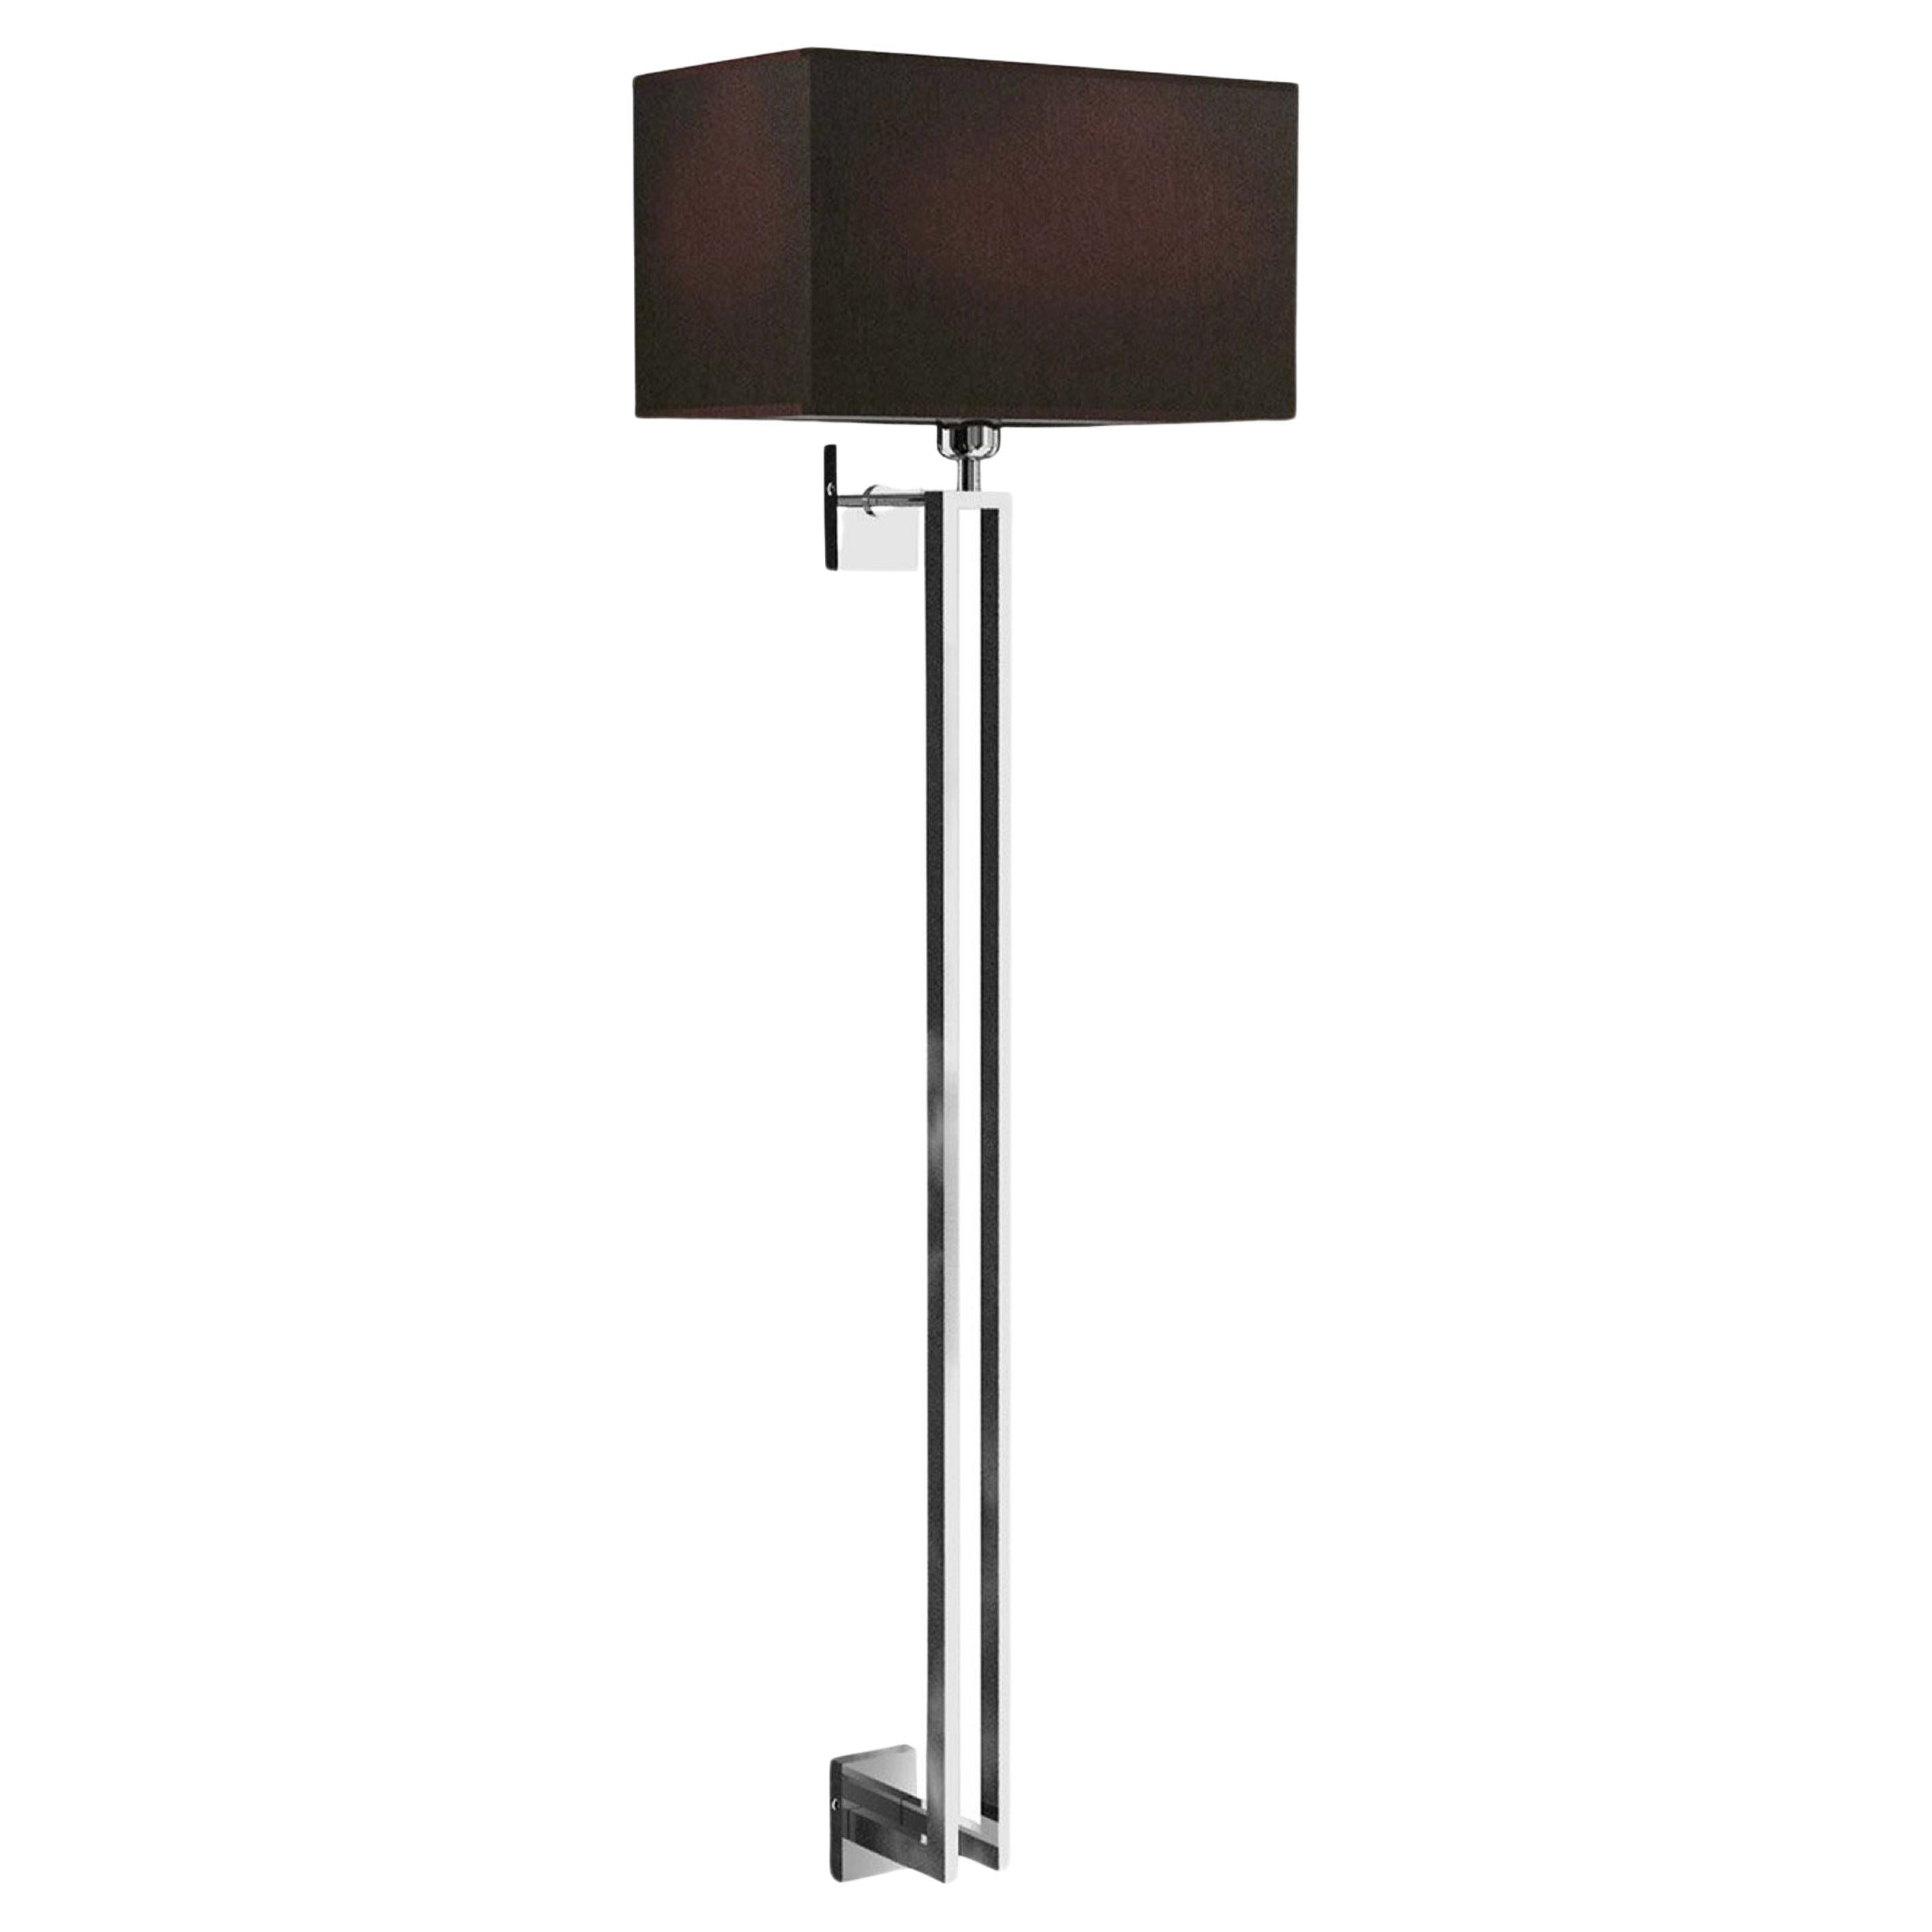 Cobalto Tall Chromed Wall Lamp with Black Shade